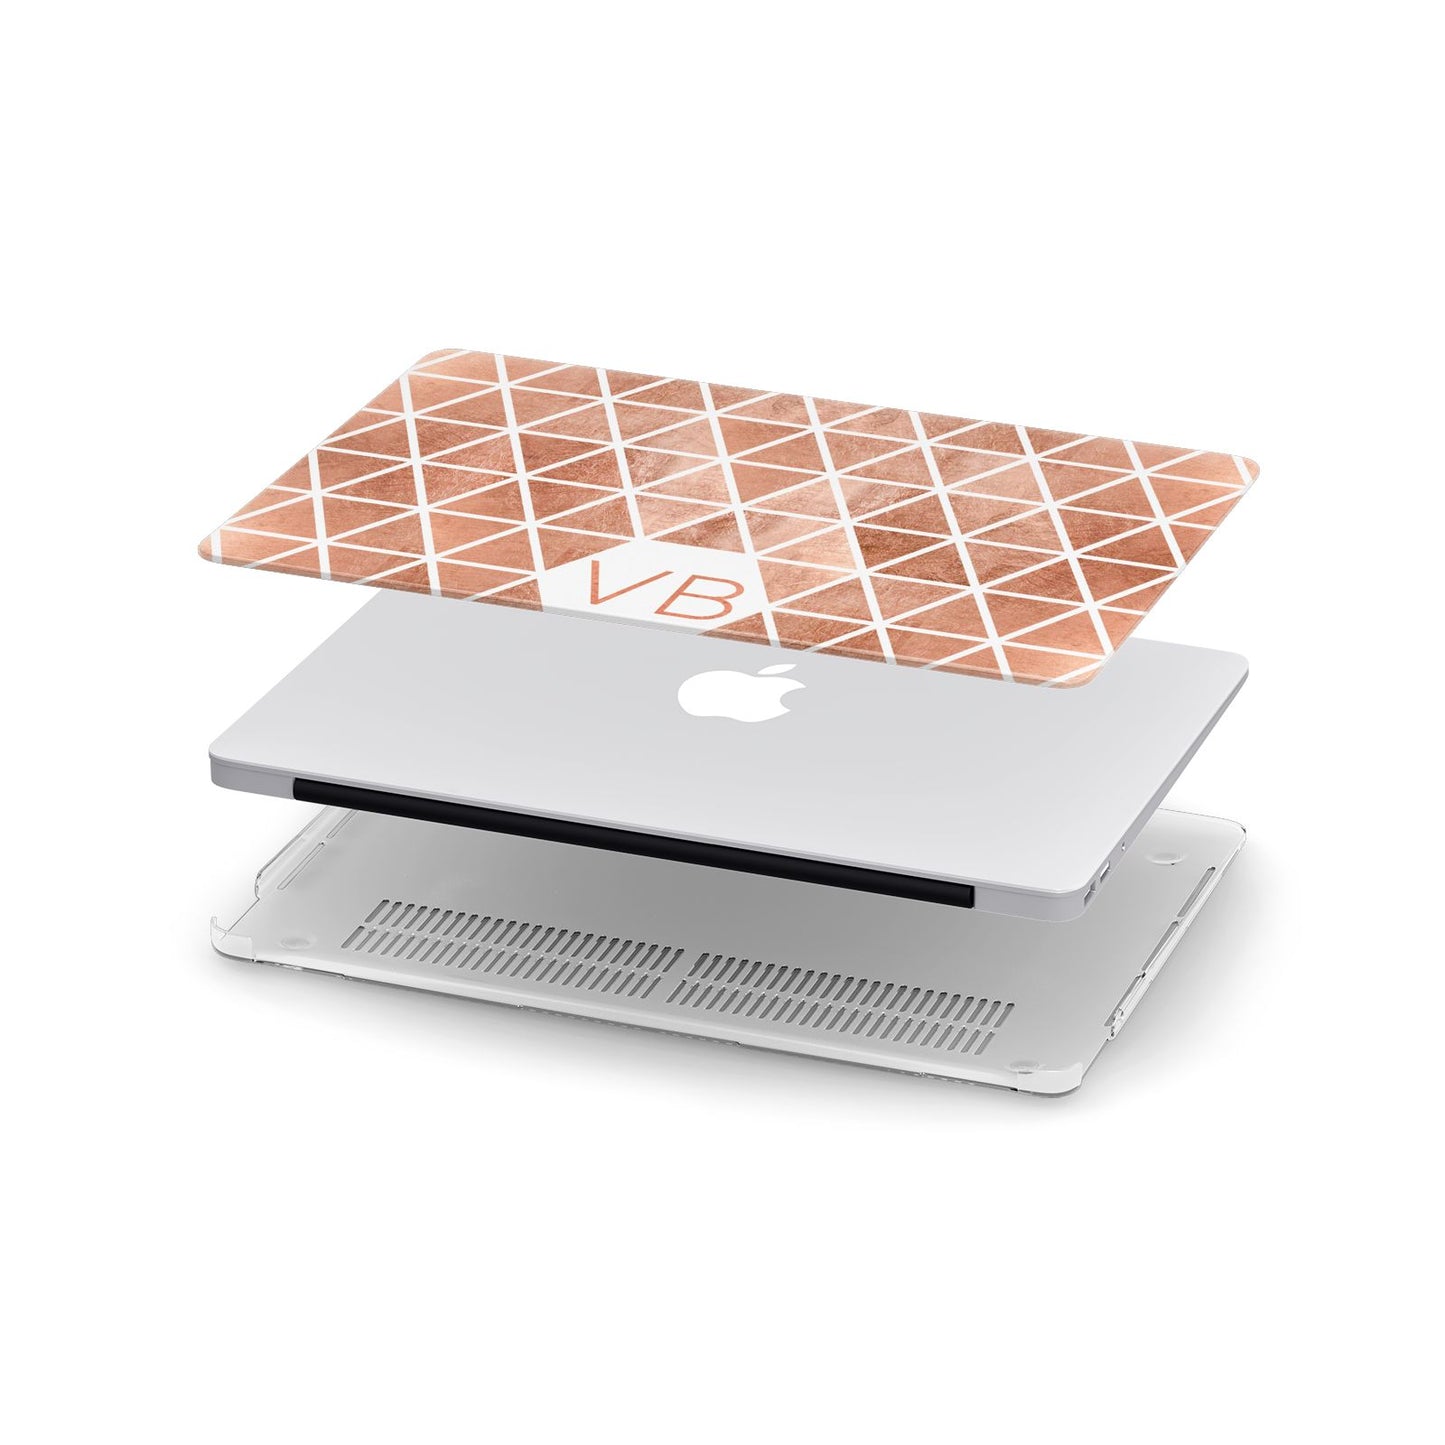 Personalised Copper Initials Apple MacBook Case in Detail